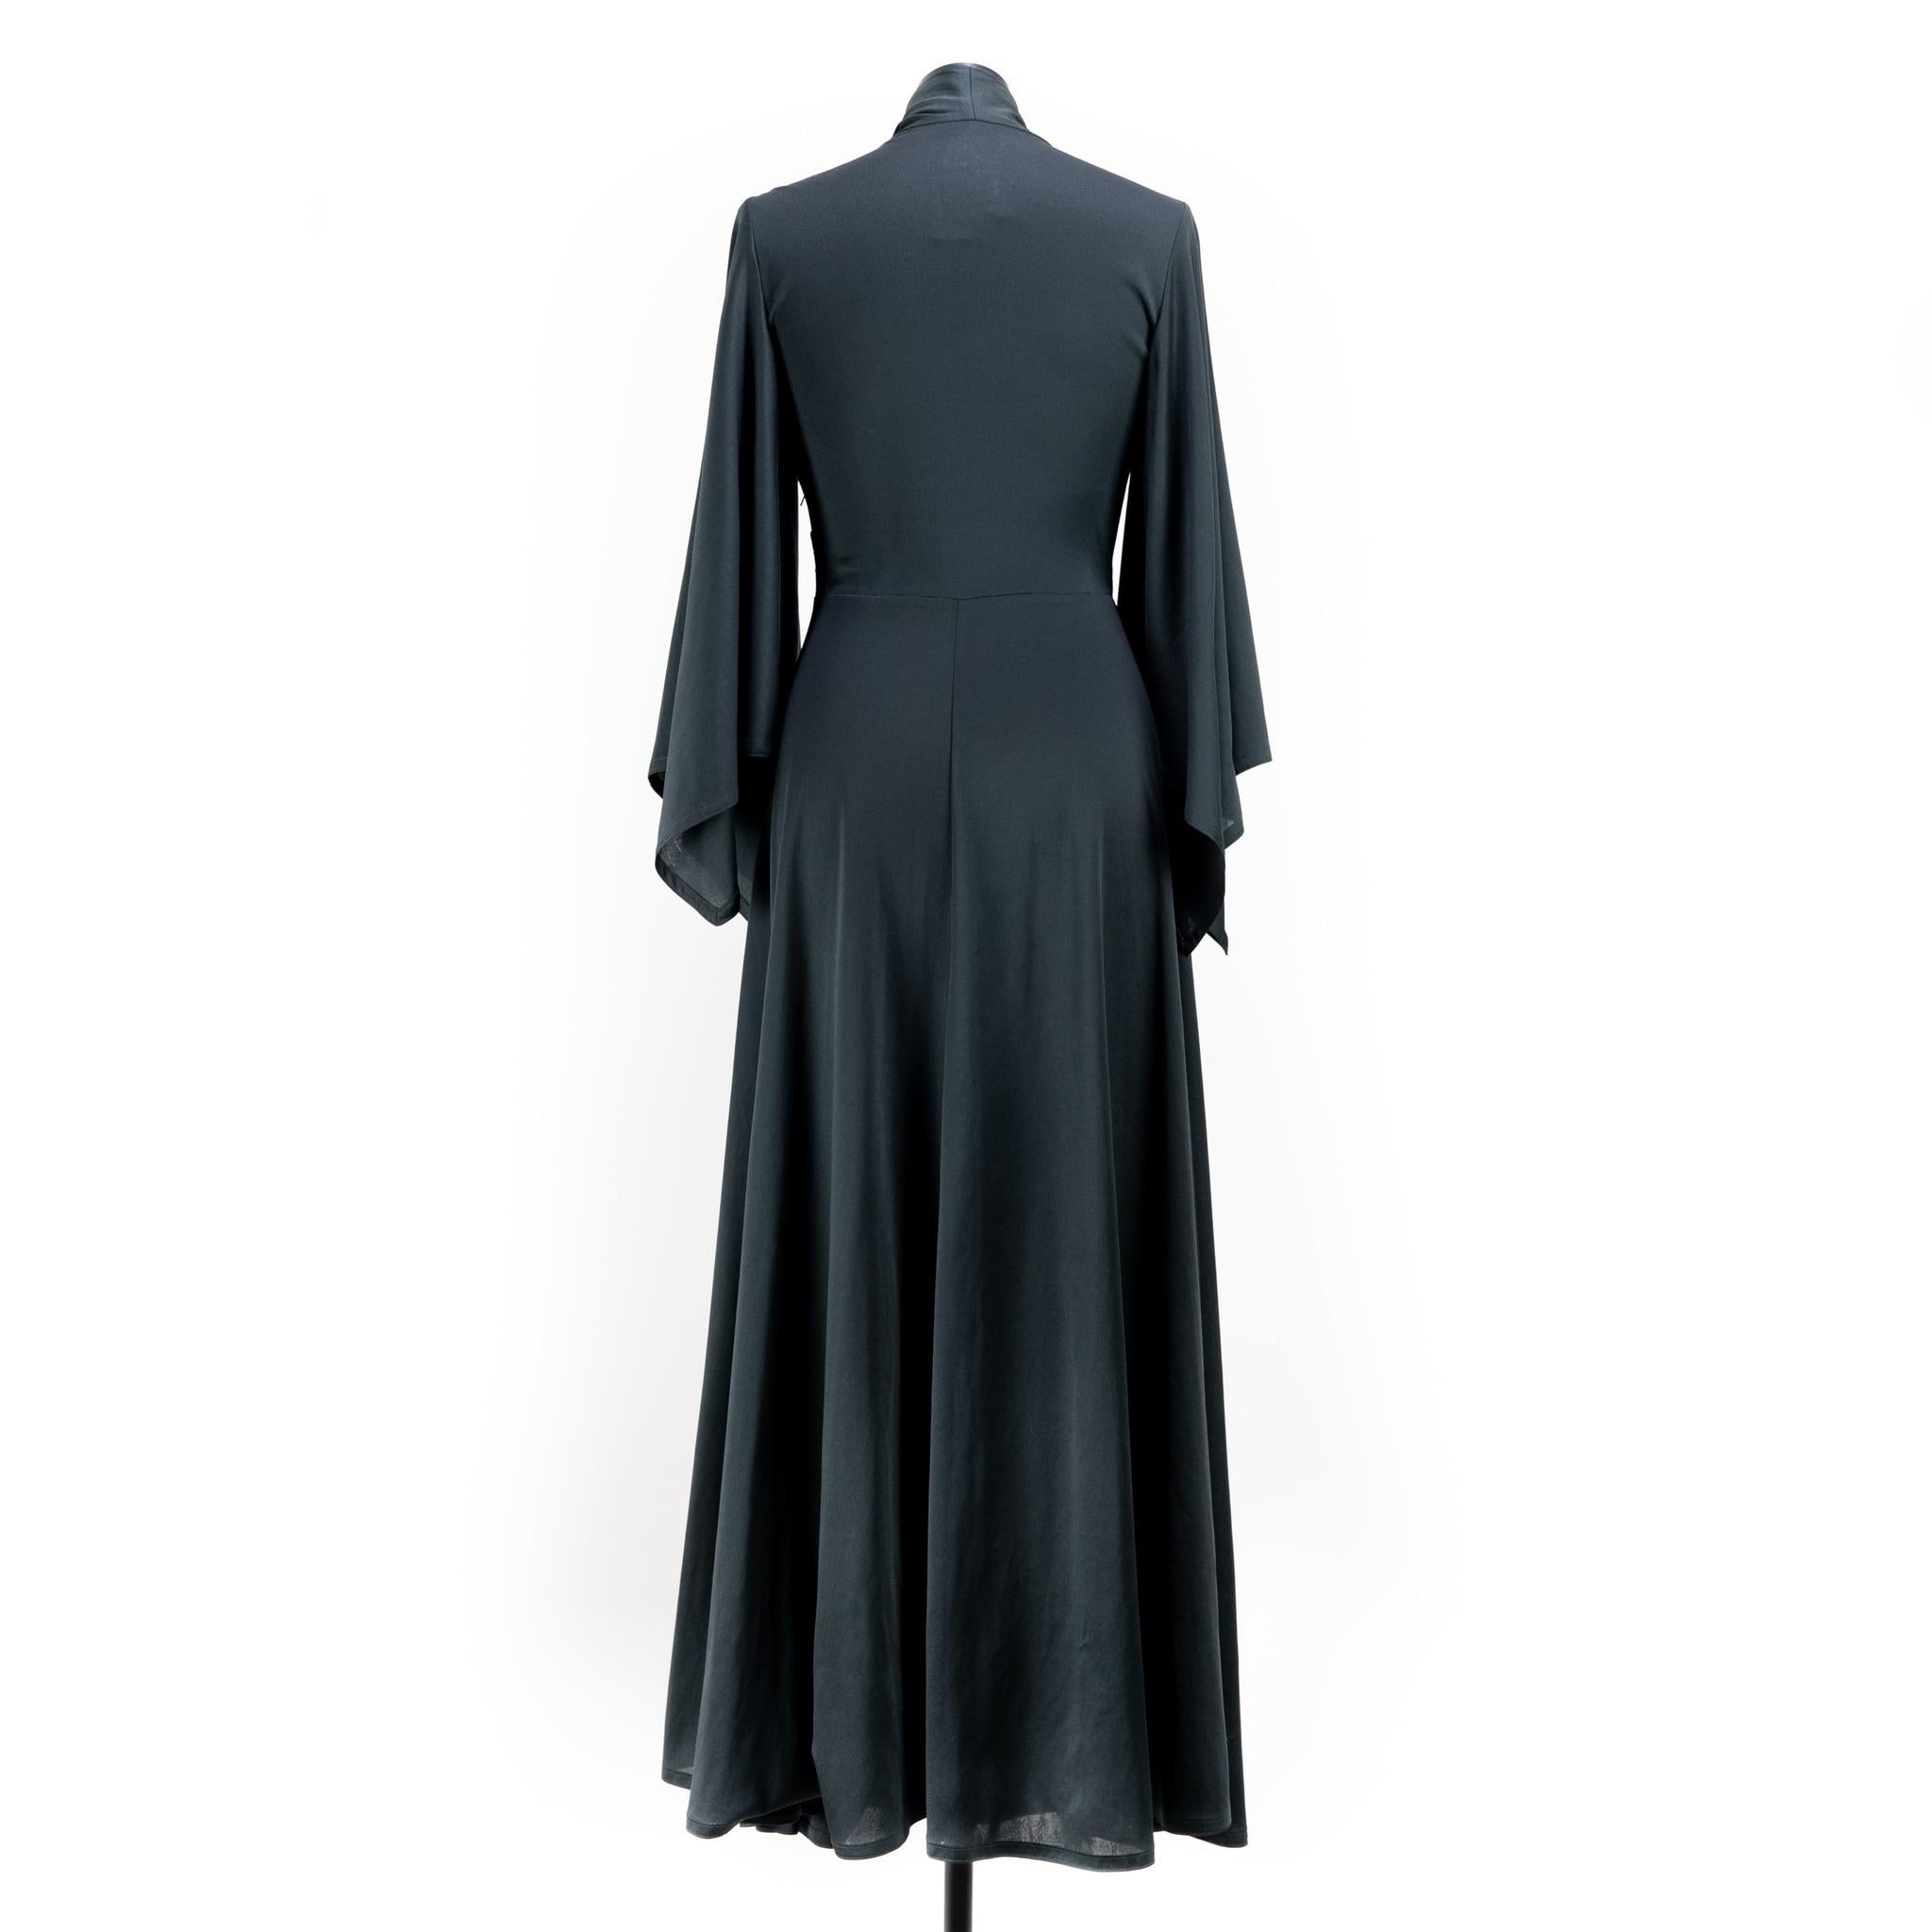 Black Jacques Heim black long dress